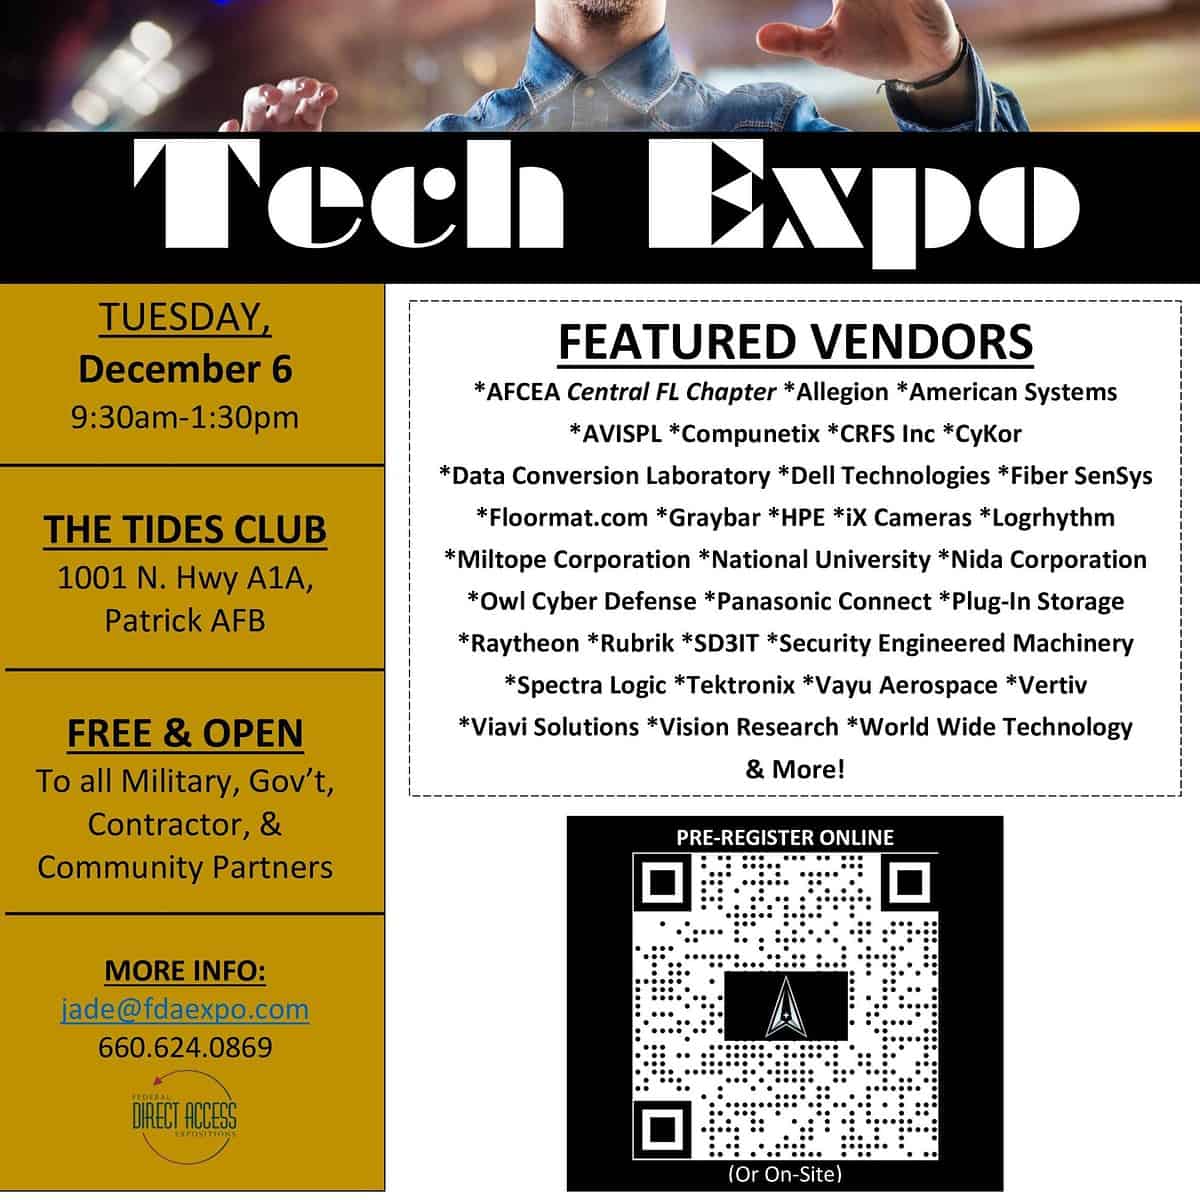 Patrick Tech Expo Flyer scaled Floormat.com